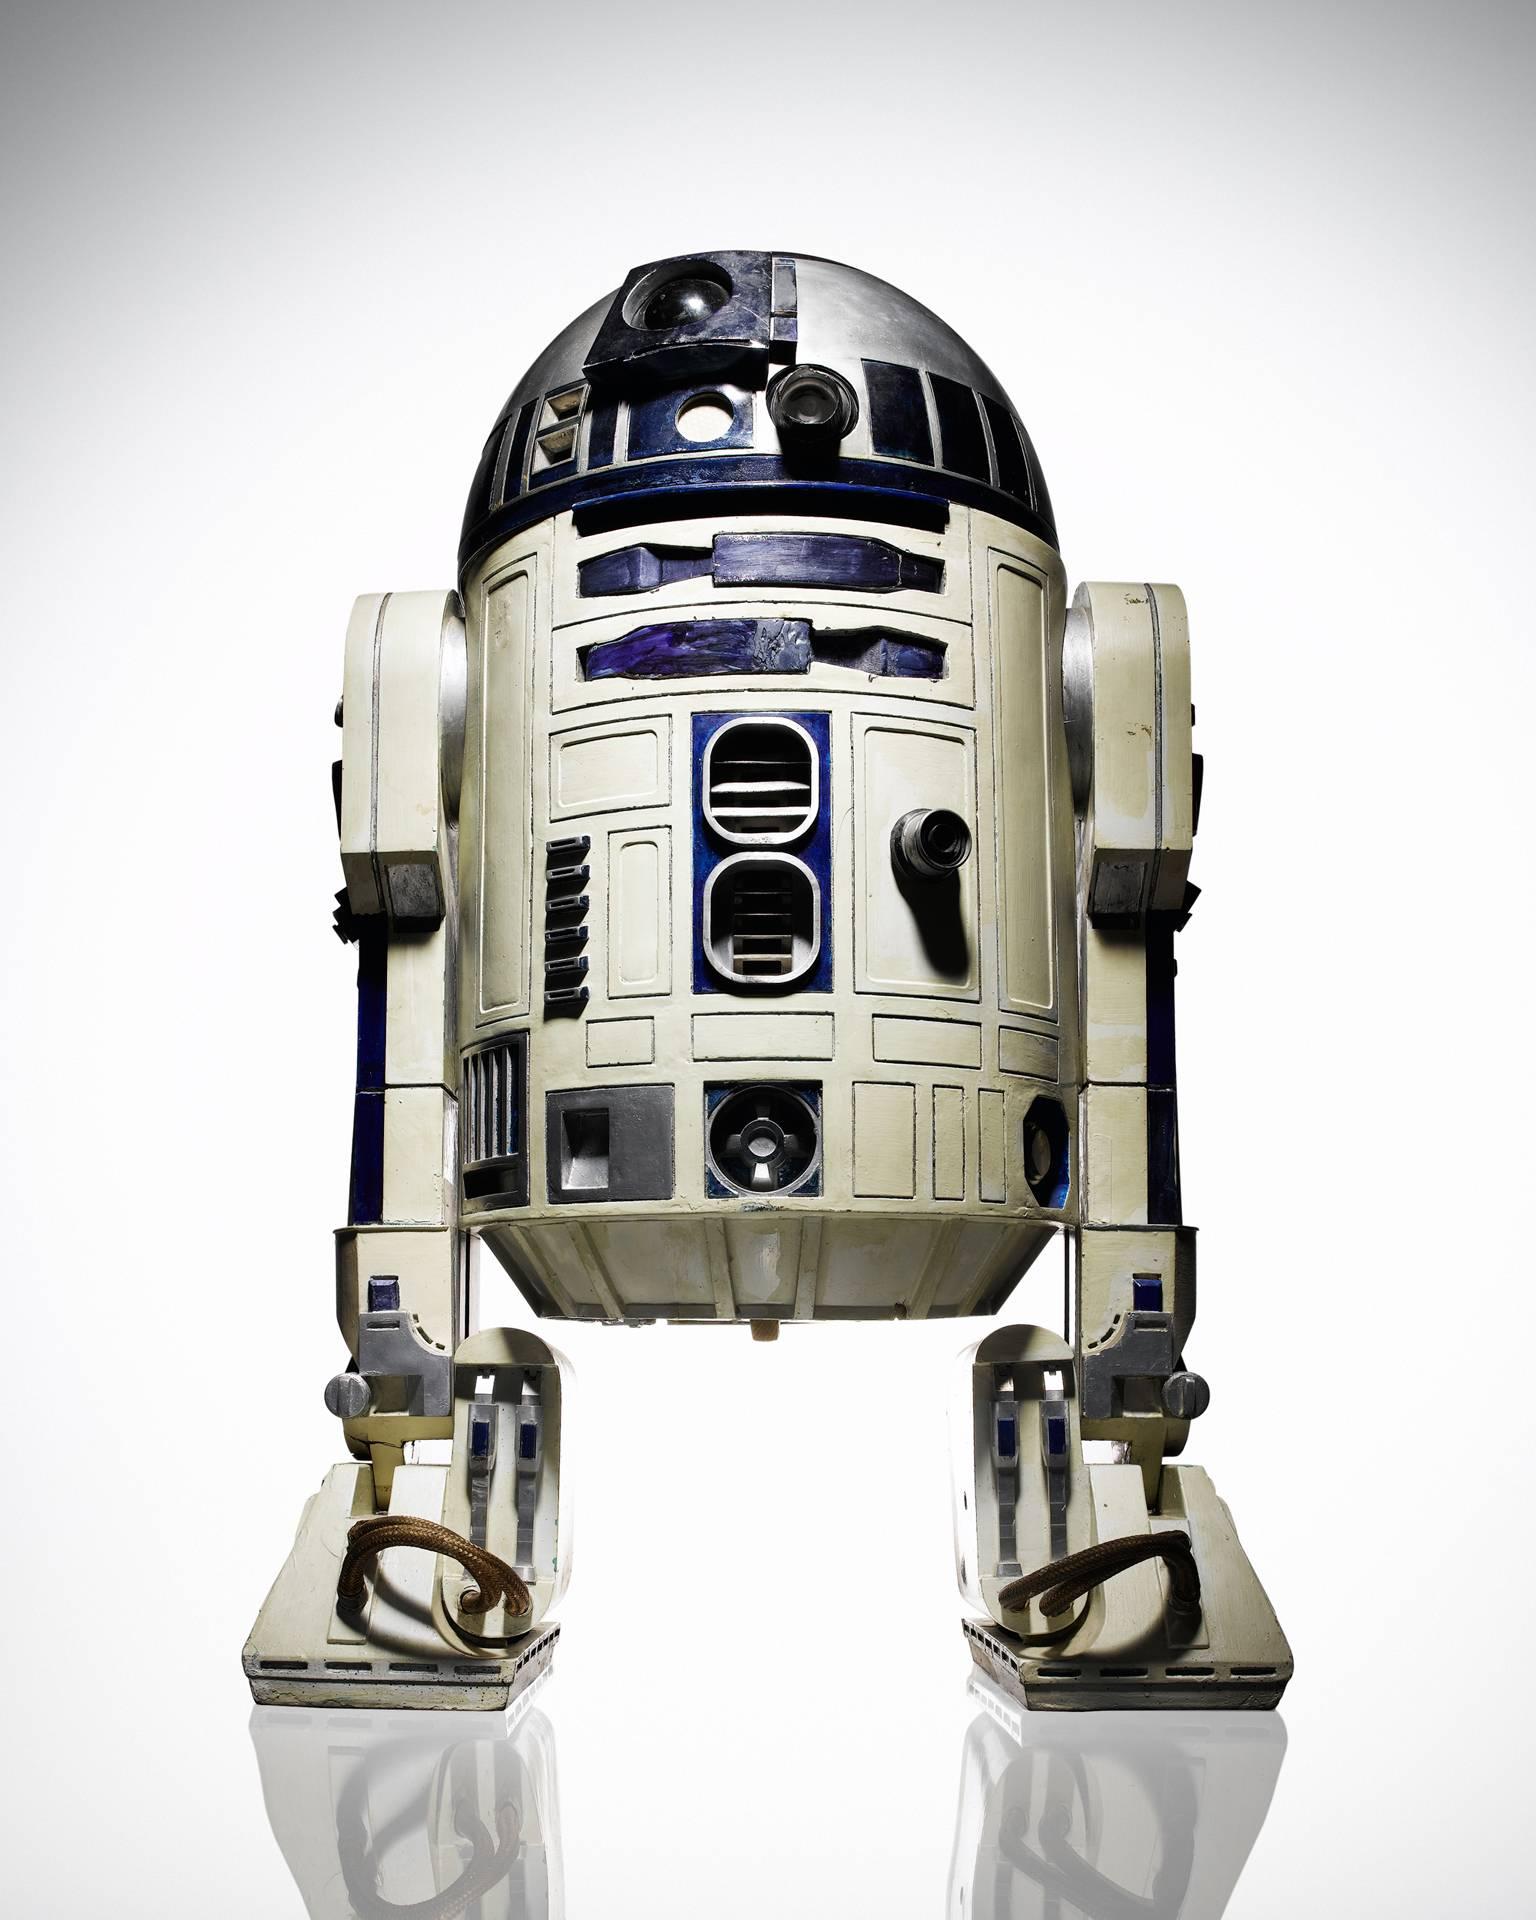 Tom Schierlitz Color Photograph - Star Wars R2-D2 - large format photograph of the original iconic droid robot